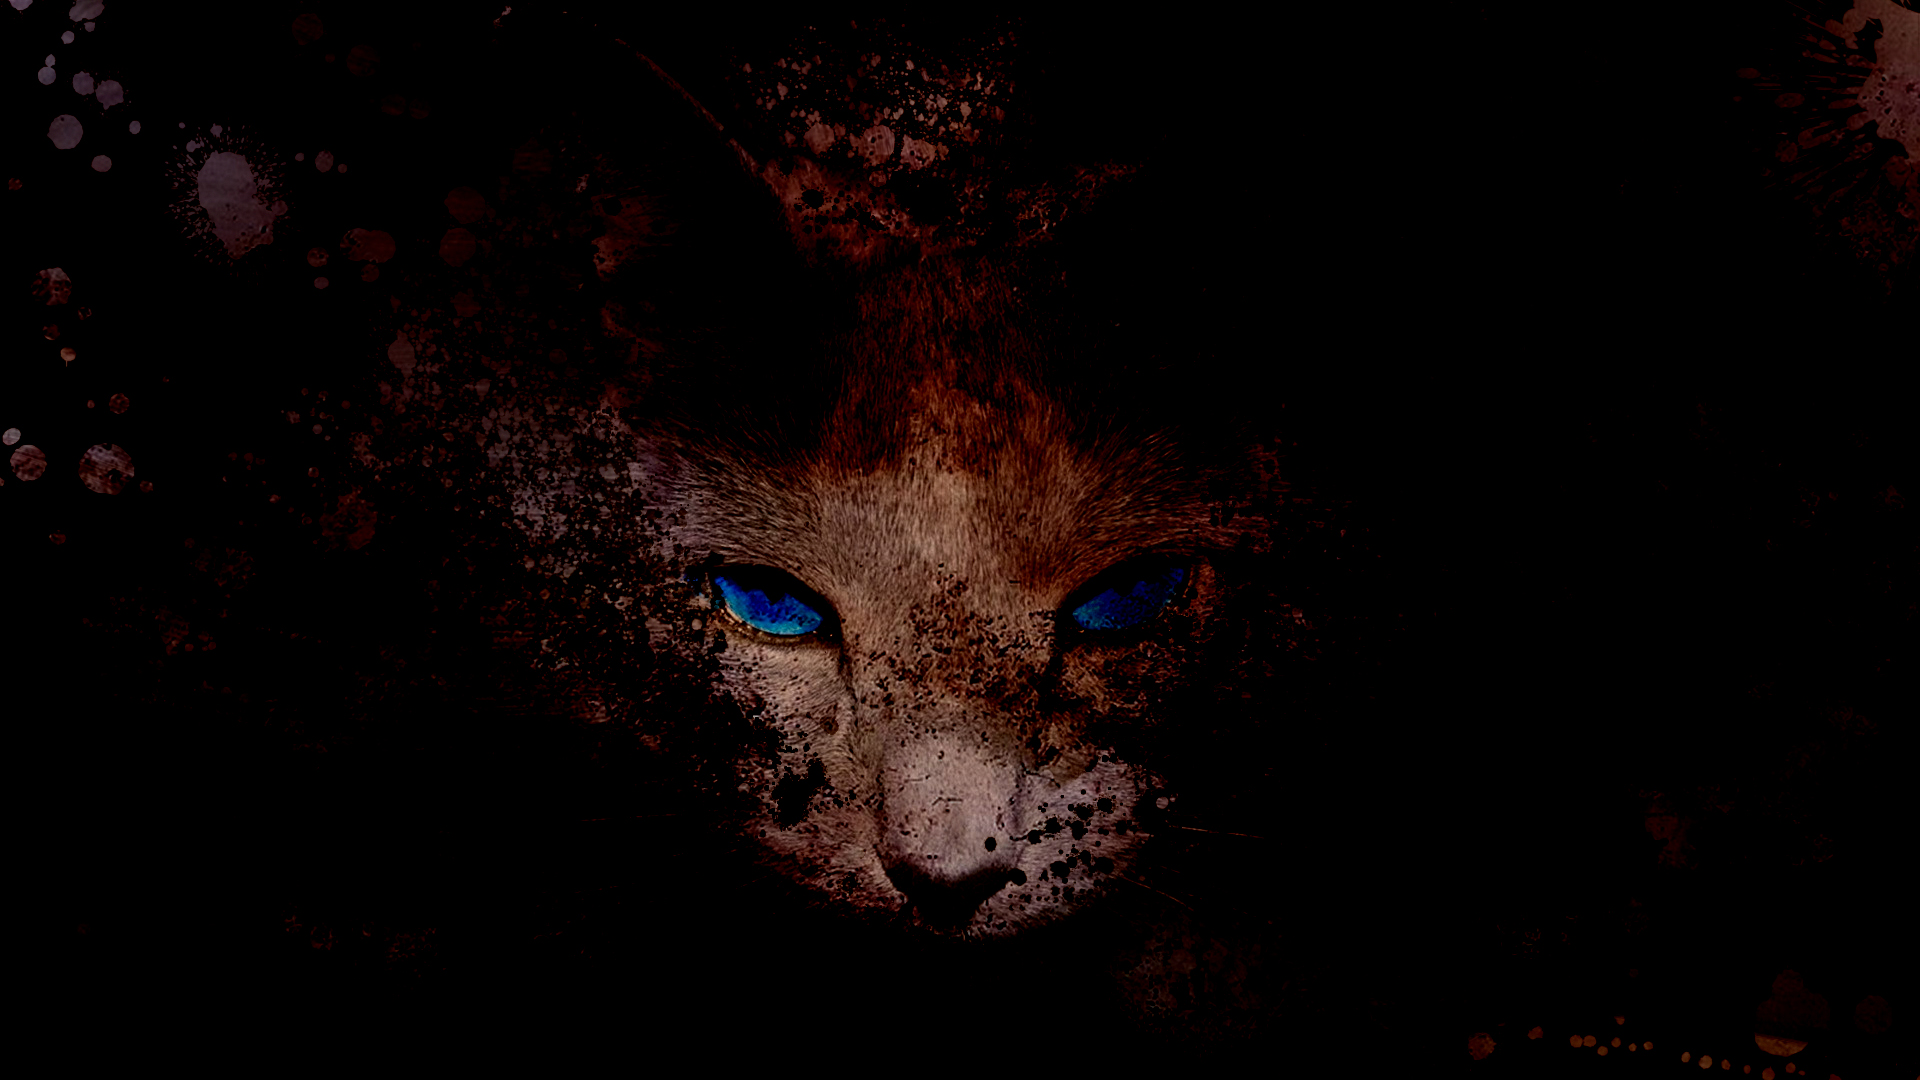 Wallpaper, cat eyes, cat ears, ash, fire, red, animals, animal eyes, animal ears 1920x1080